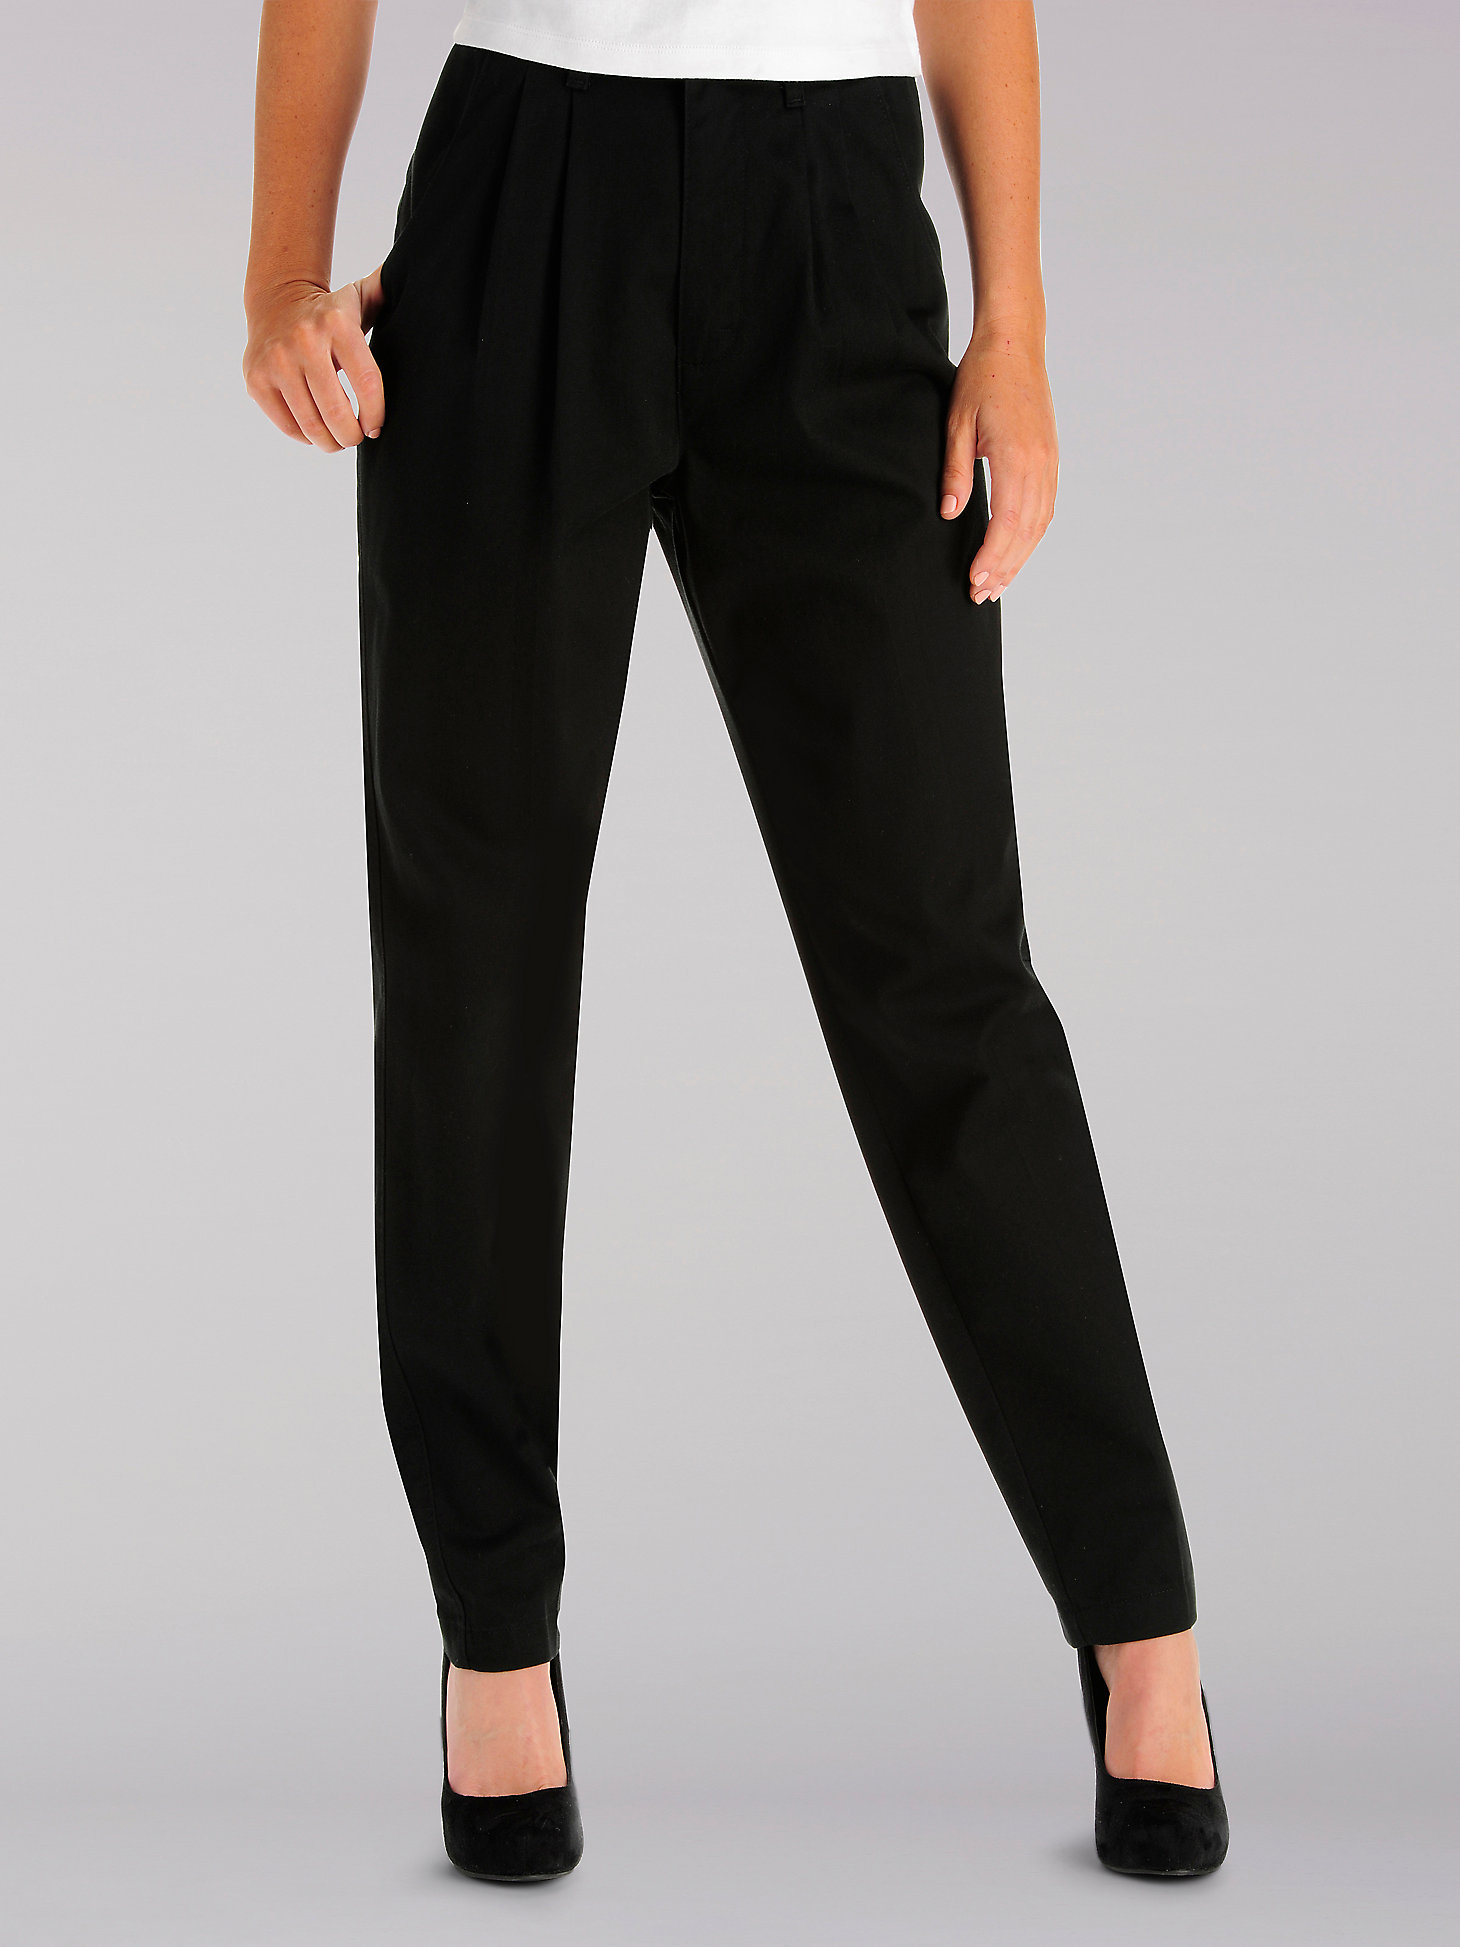 Women’s Side Elastic Pants (Petite) in Black main view